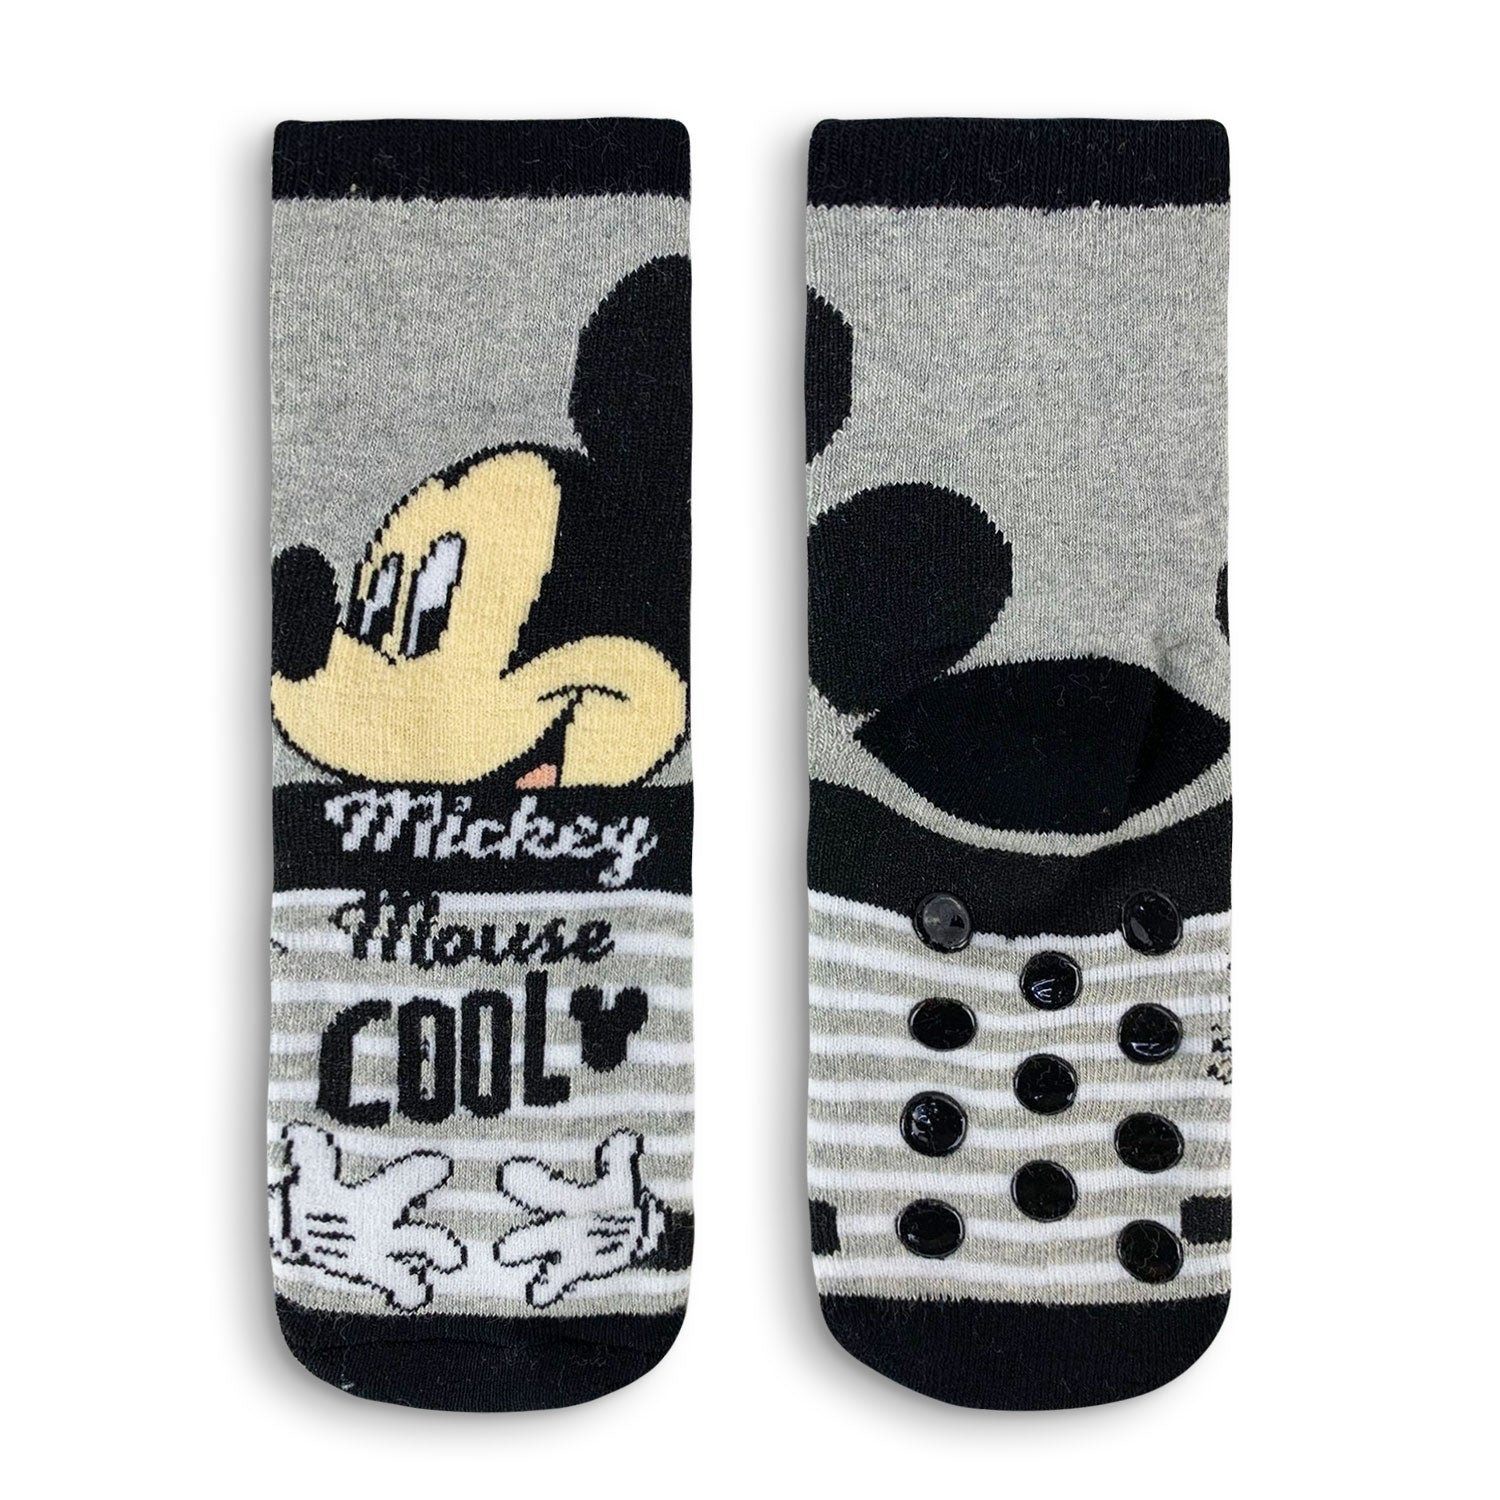 Calzini antiscivolo bambino Disney Mickey Mouse in cotone Bimbo 4591